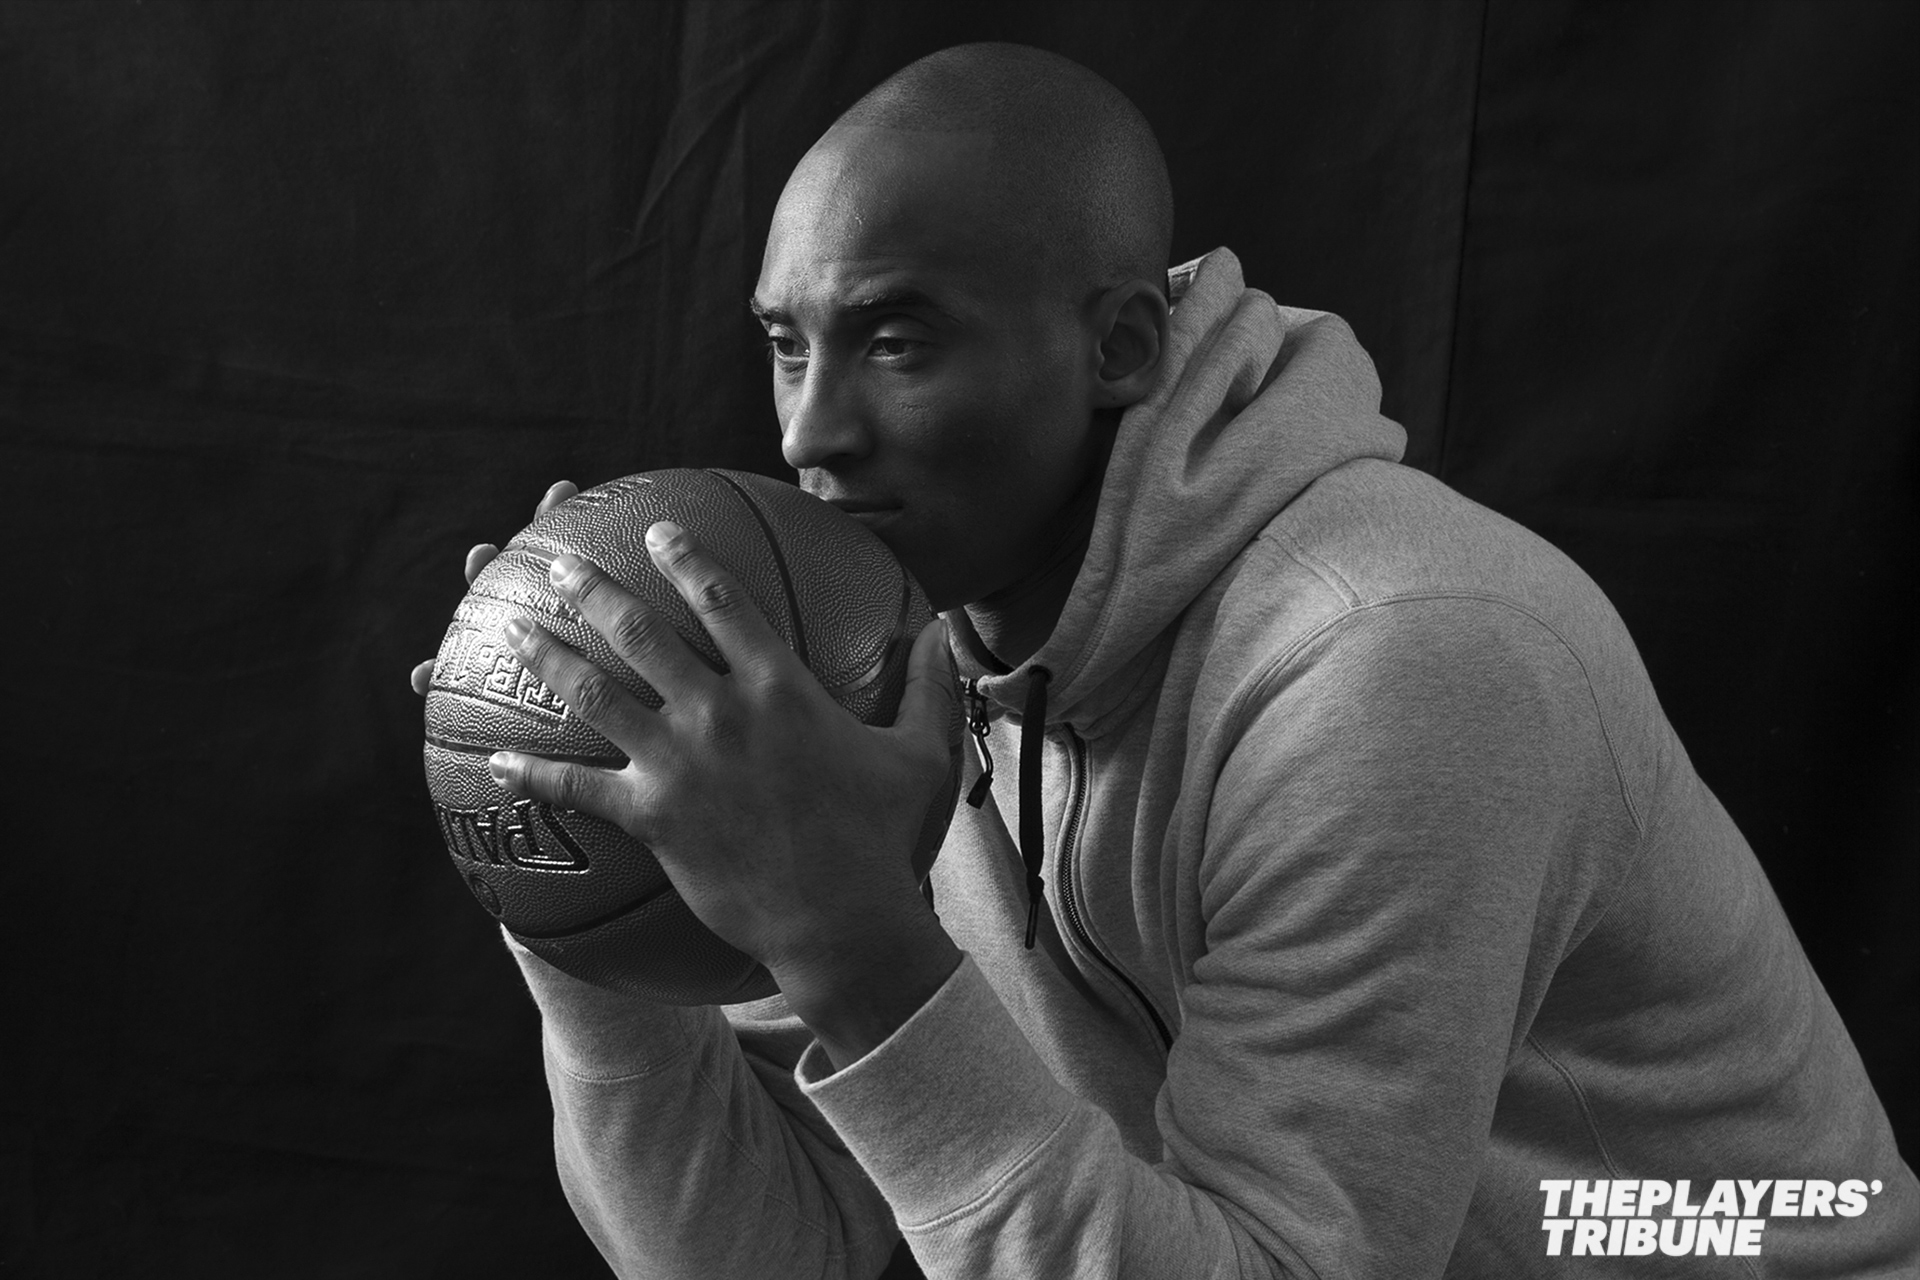 Video Michael Jordan's relationship with Kobe Bryant - ABC News